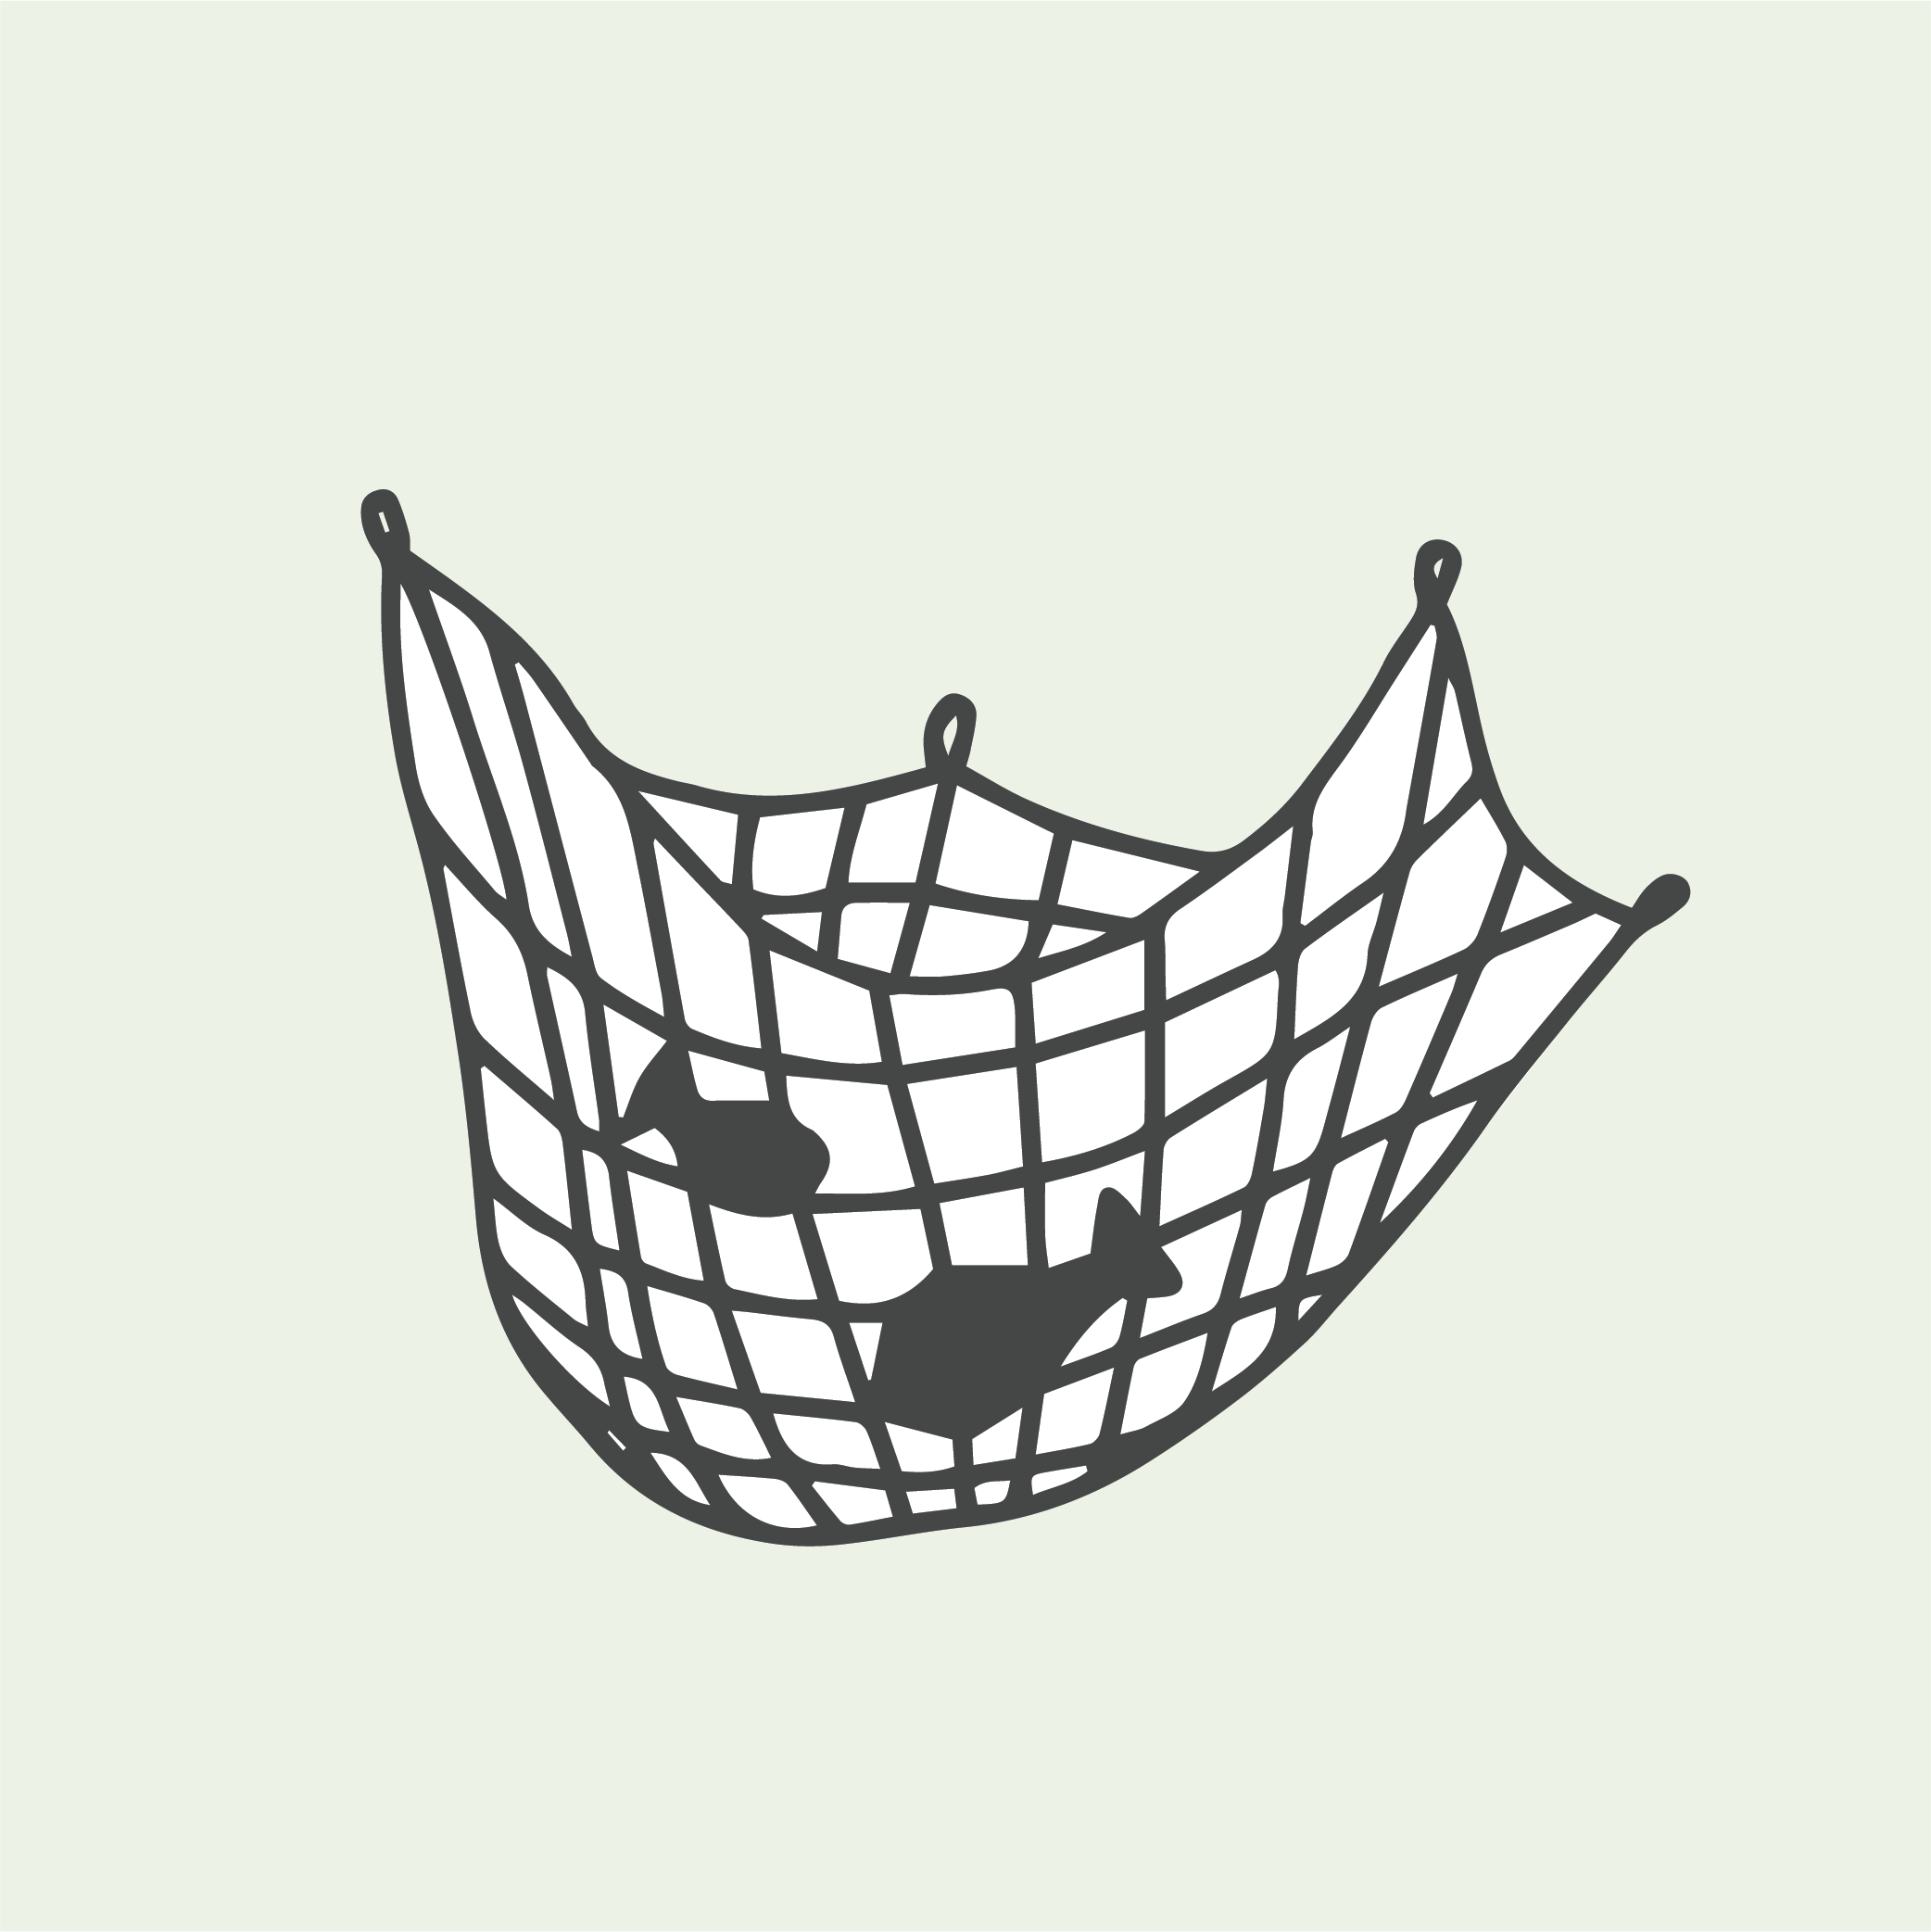 Illustration of a fishing net